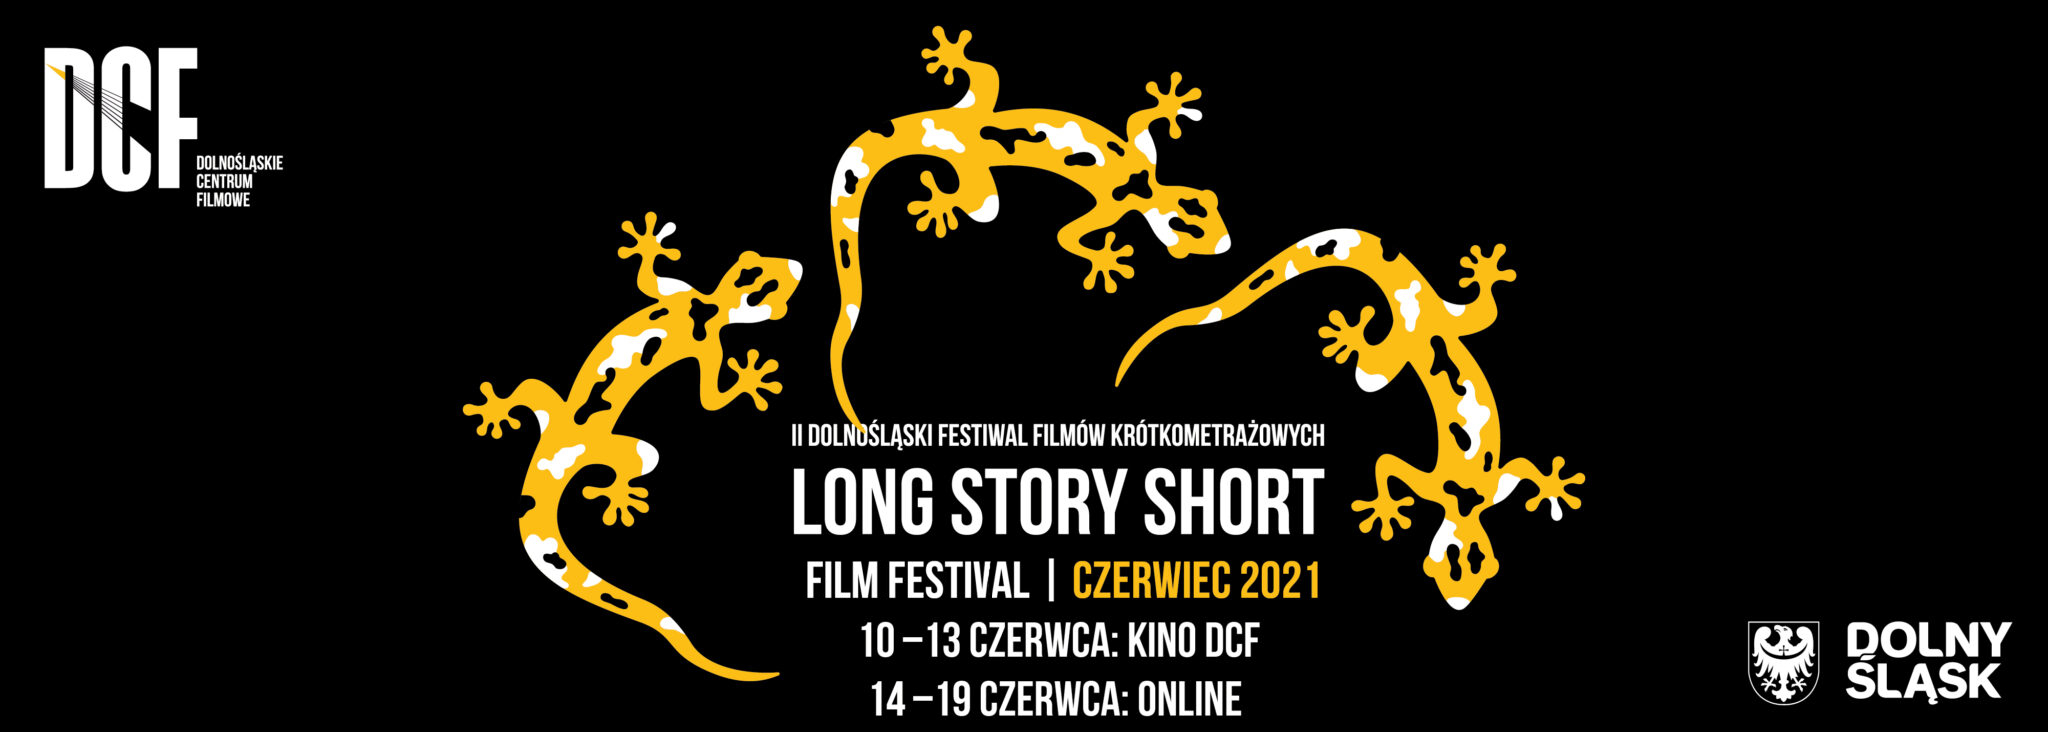 Shortfilm festival